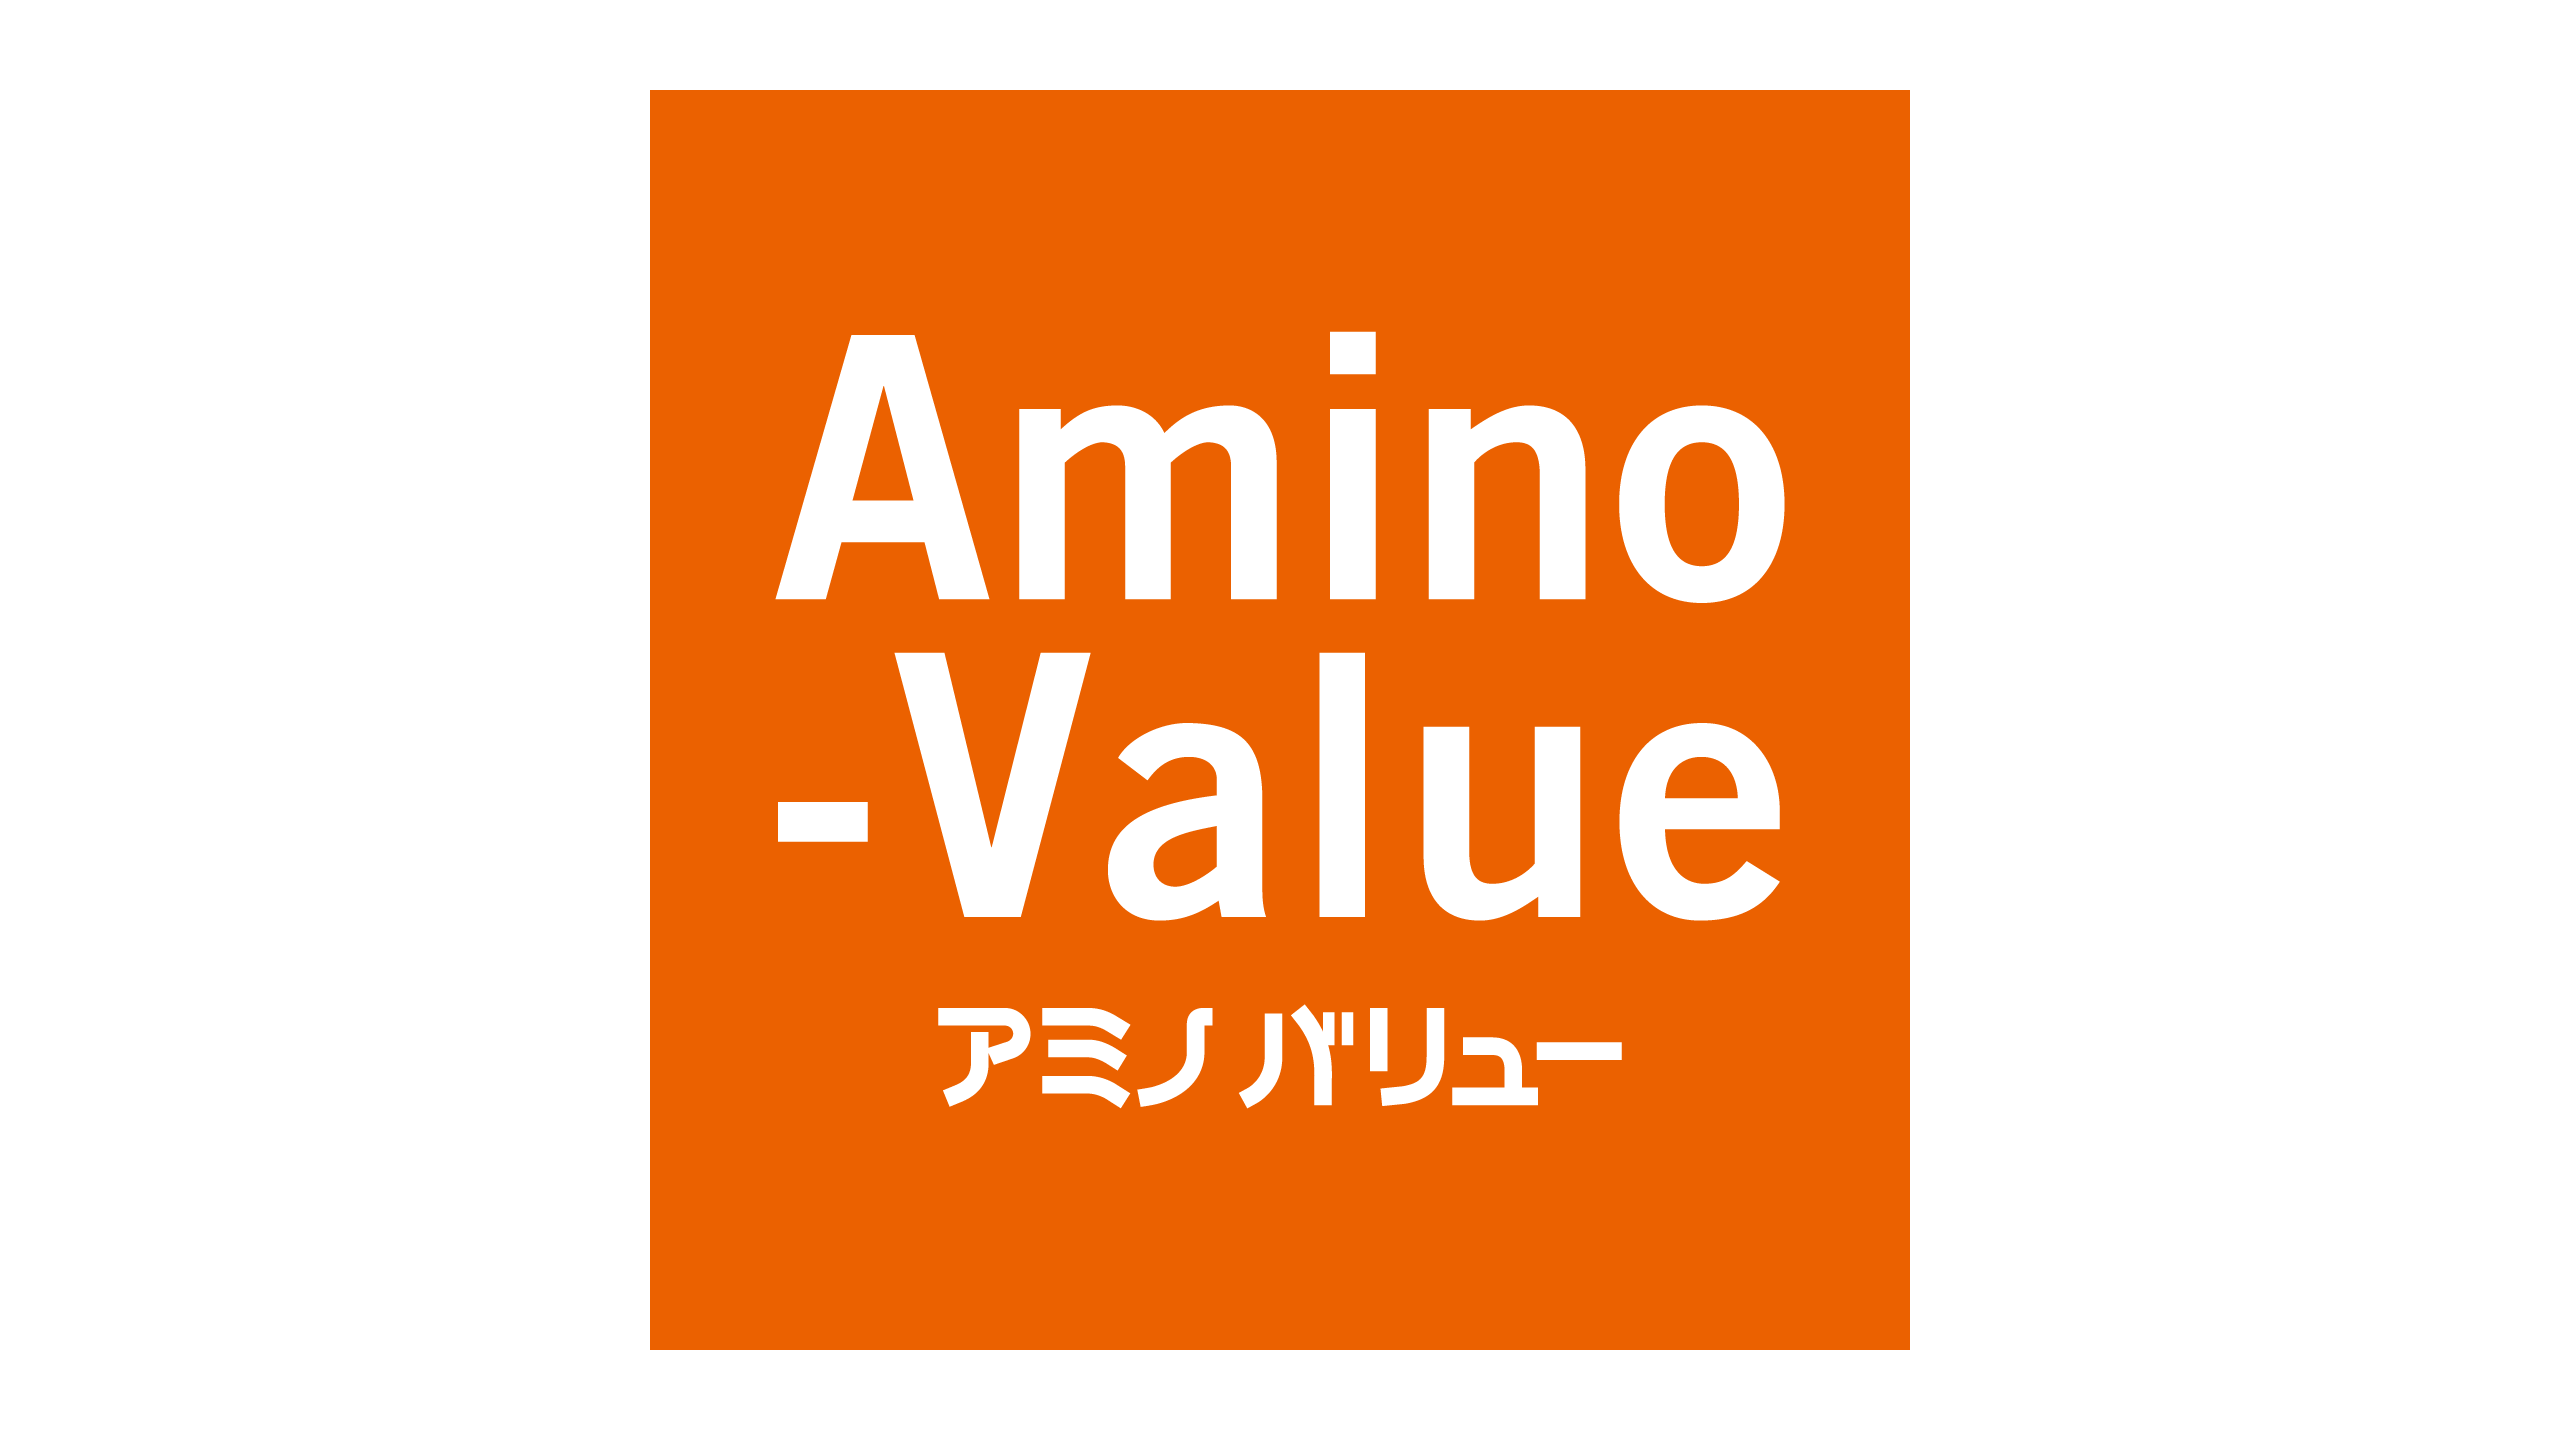 Amino-Value アミノバリュー ロゴ